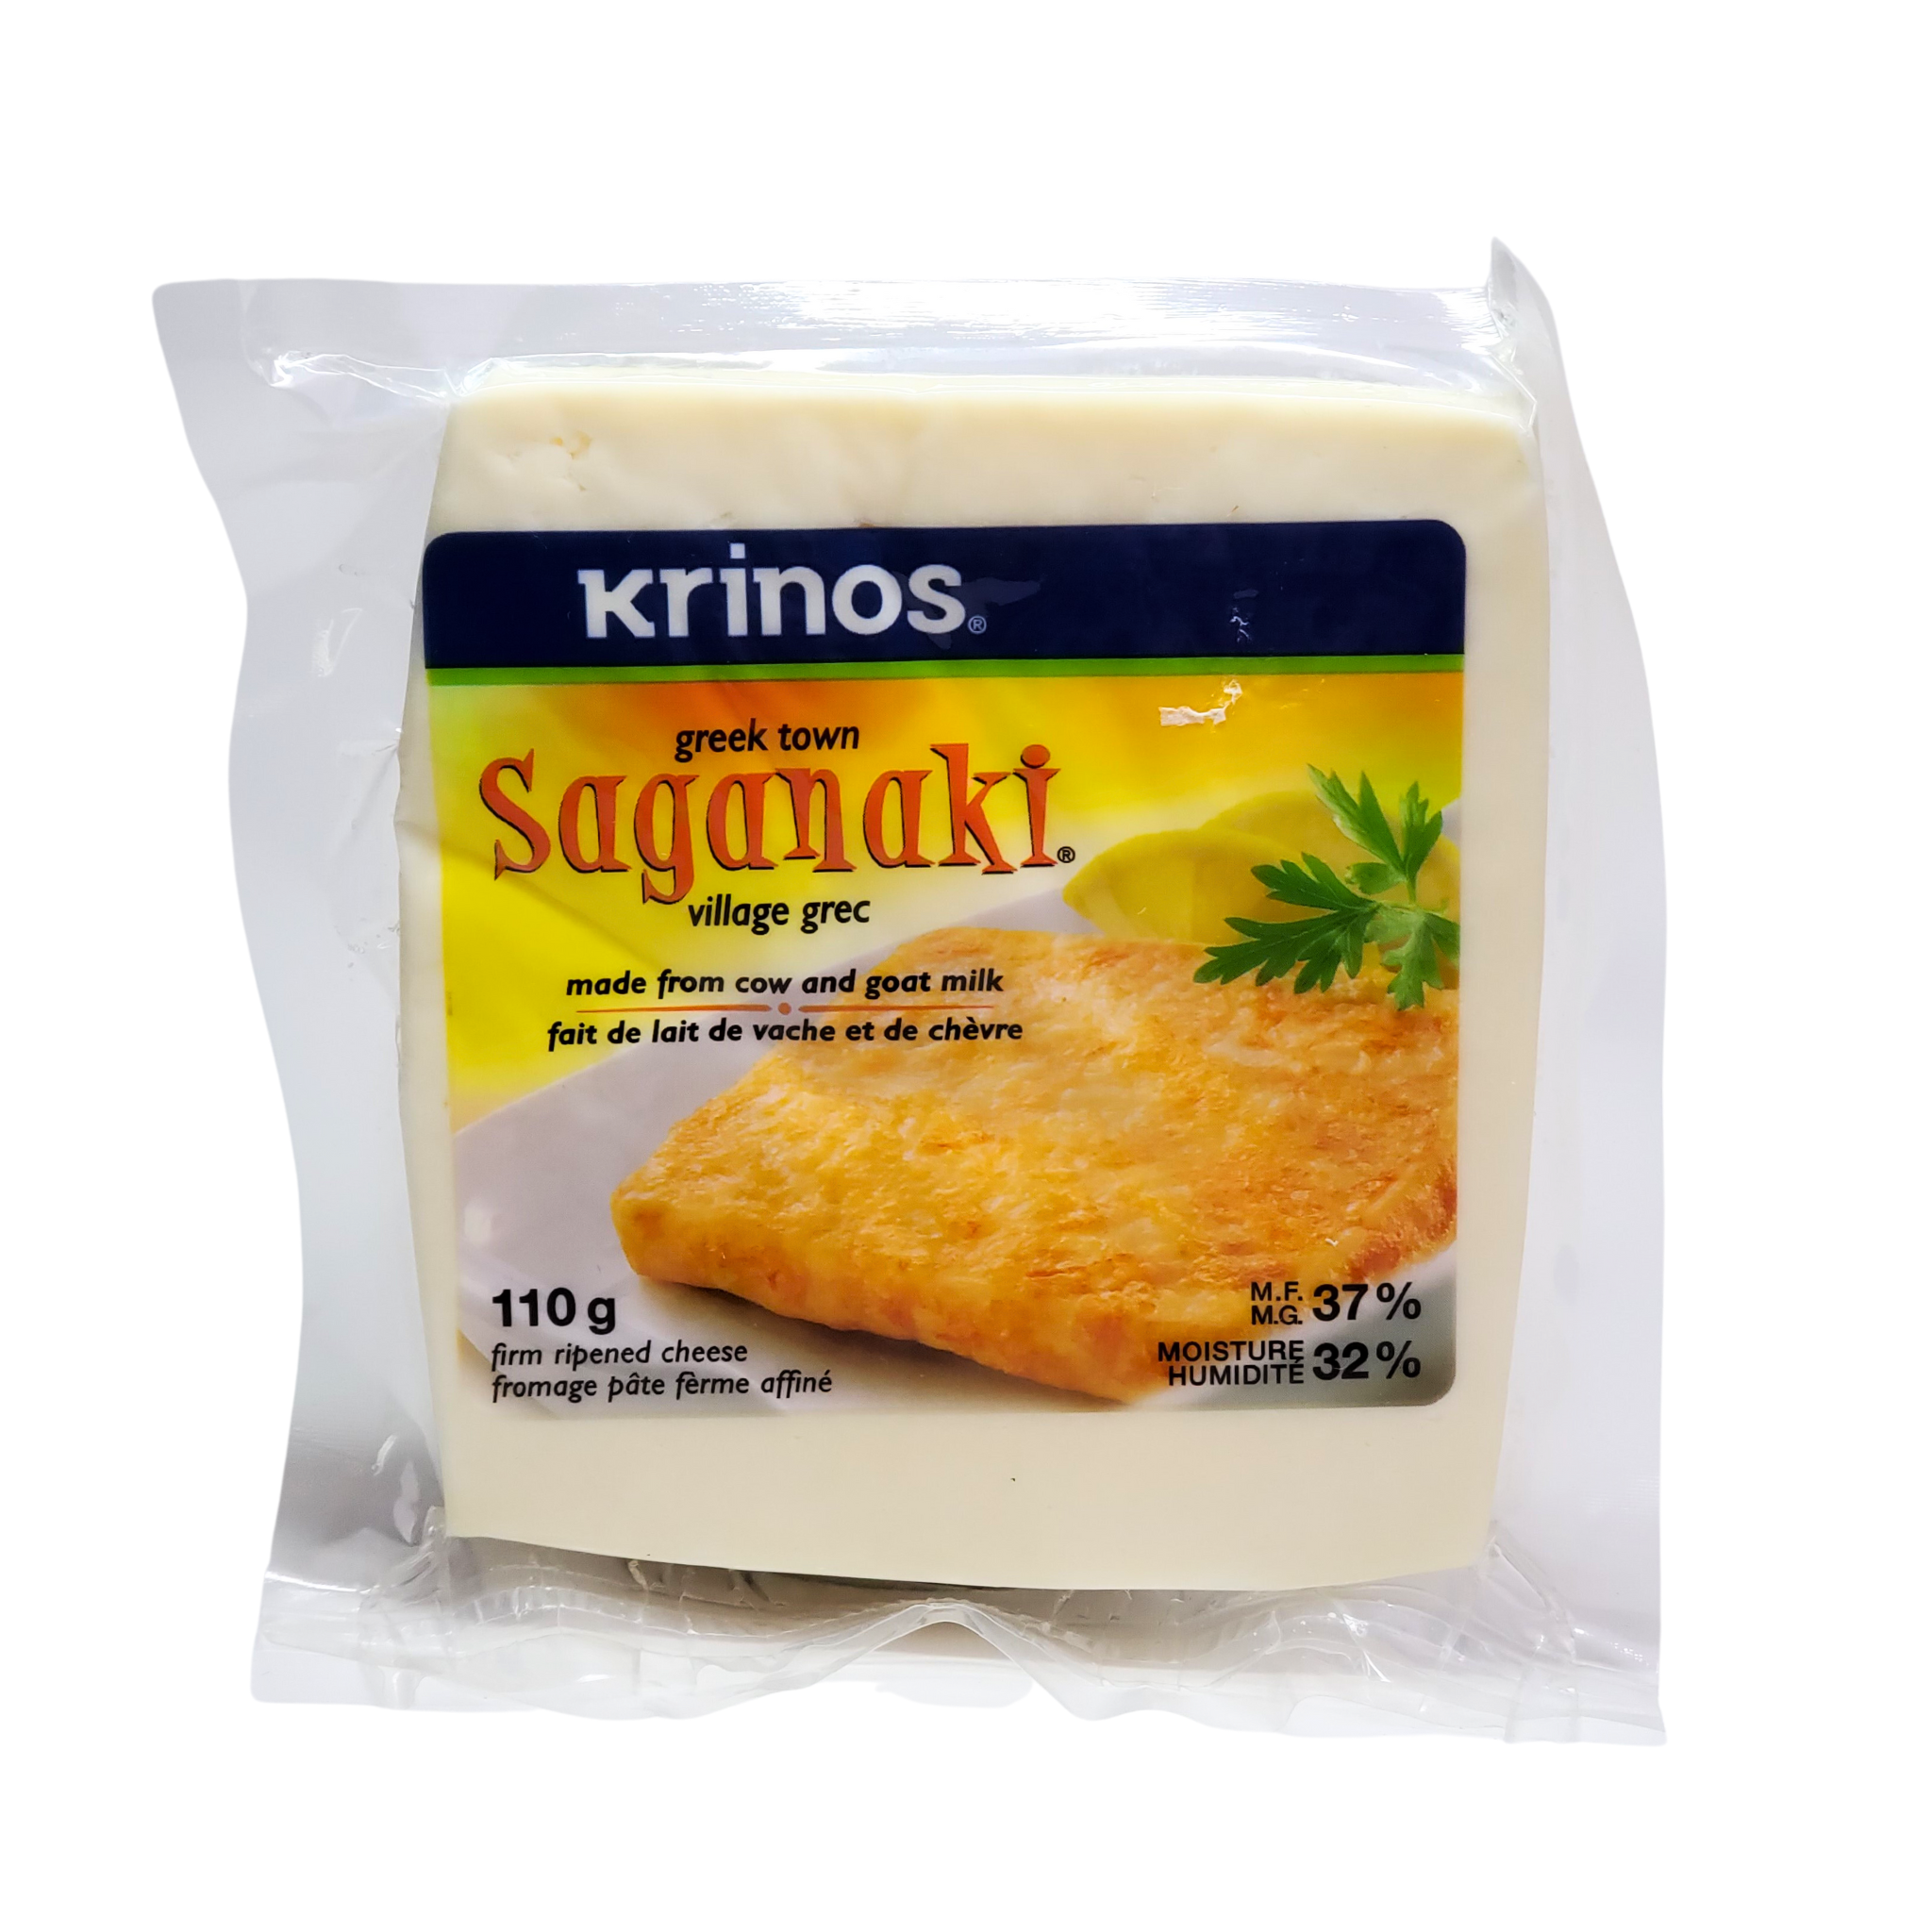 Krinos Saganaki greek town  firm ripened cheese 110g